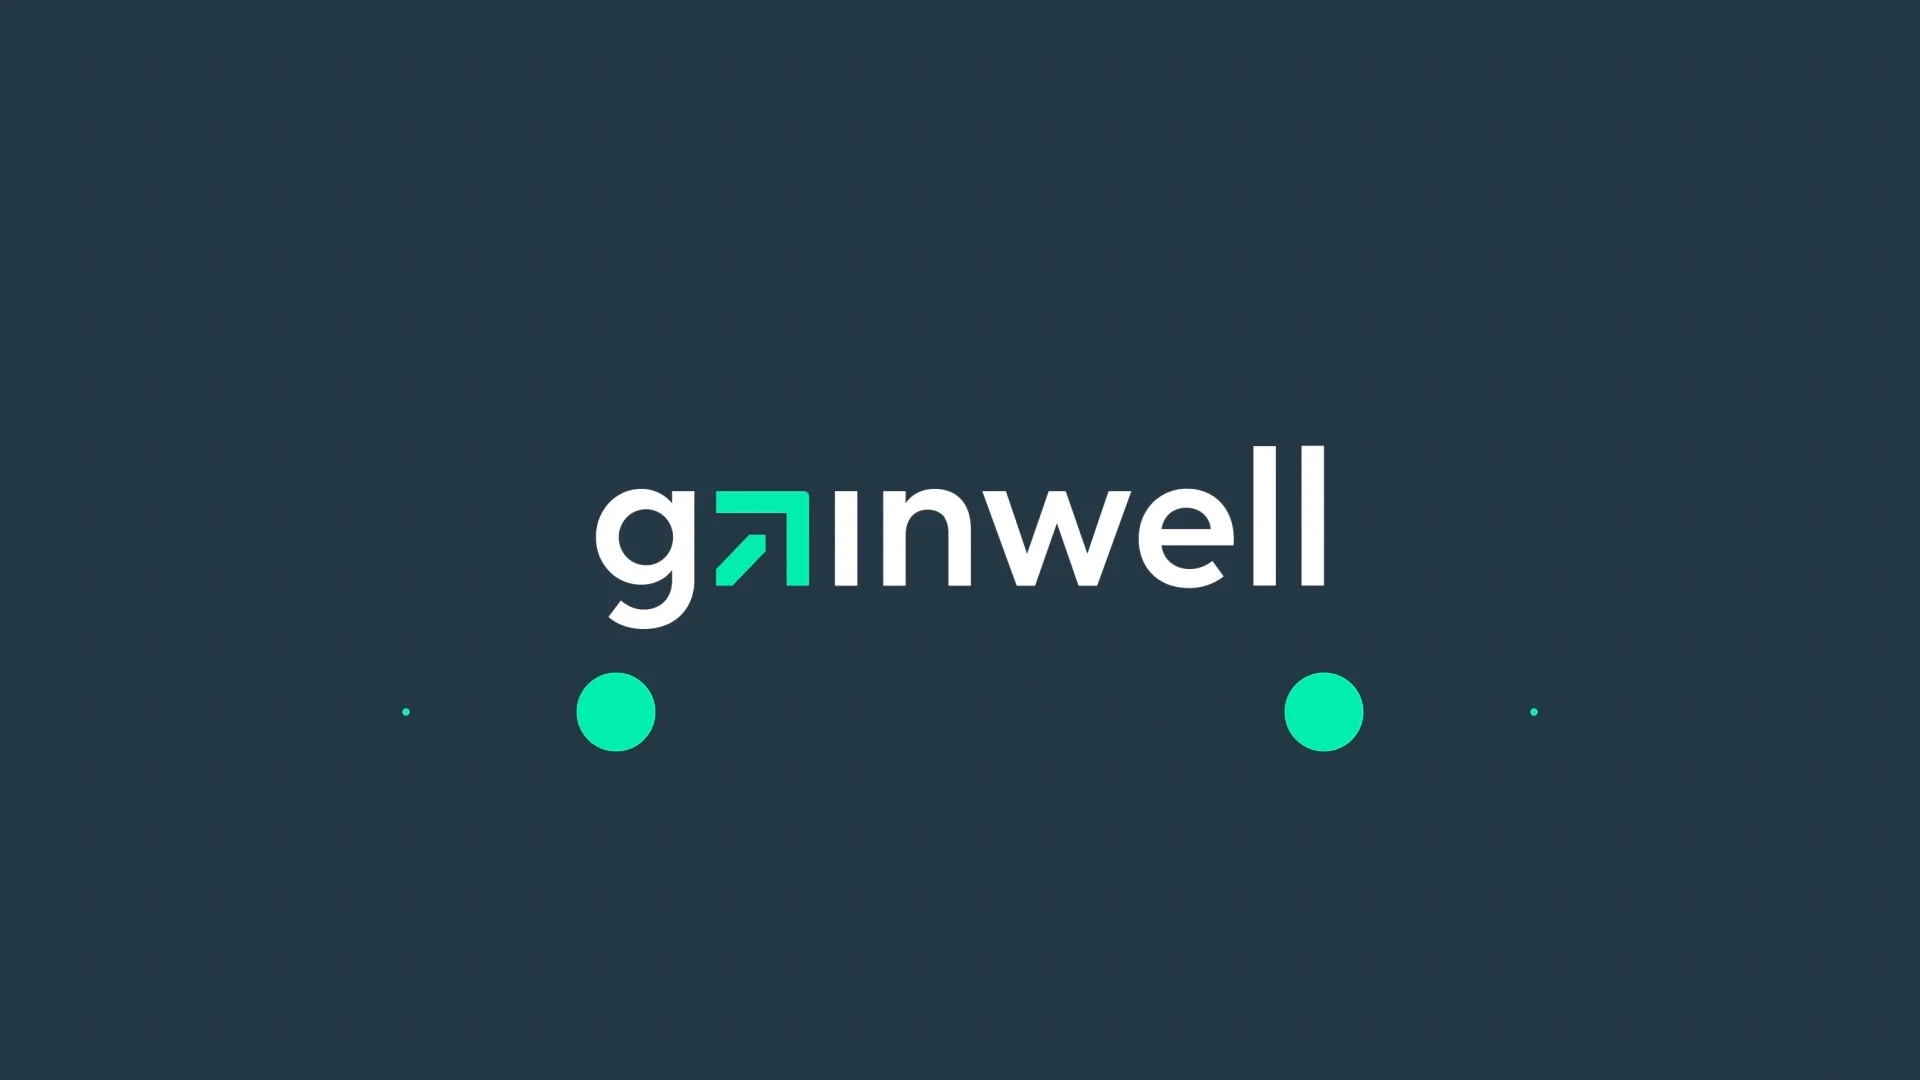 Gainwell CWDA Conference on Vimeo